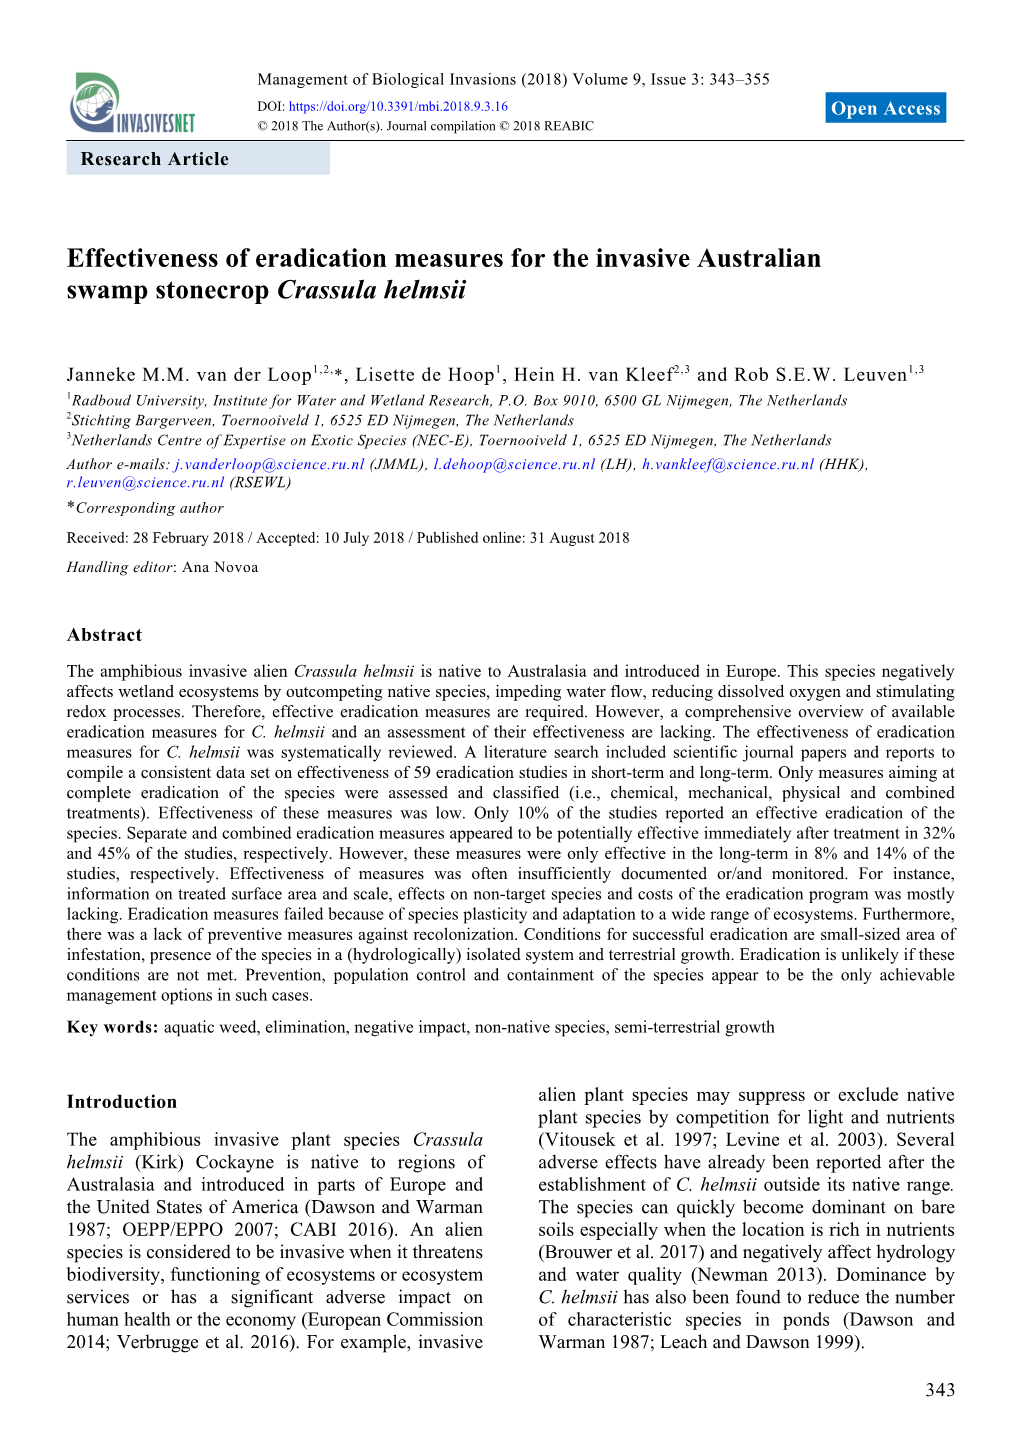 Effectiveness of Eradication Measures for the Invasive Australian Swamp Stonecrop Crassula Helmsii